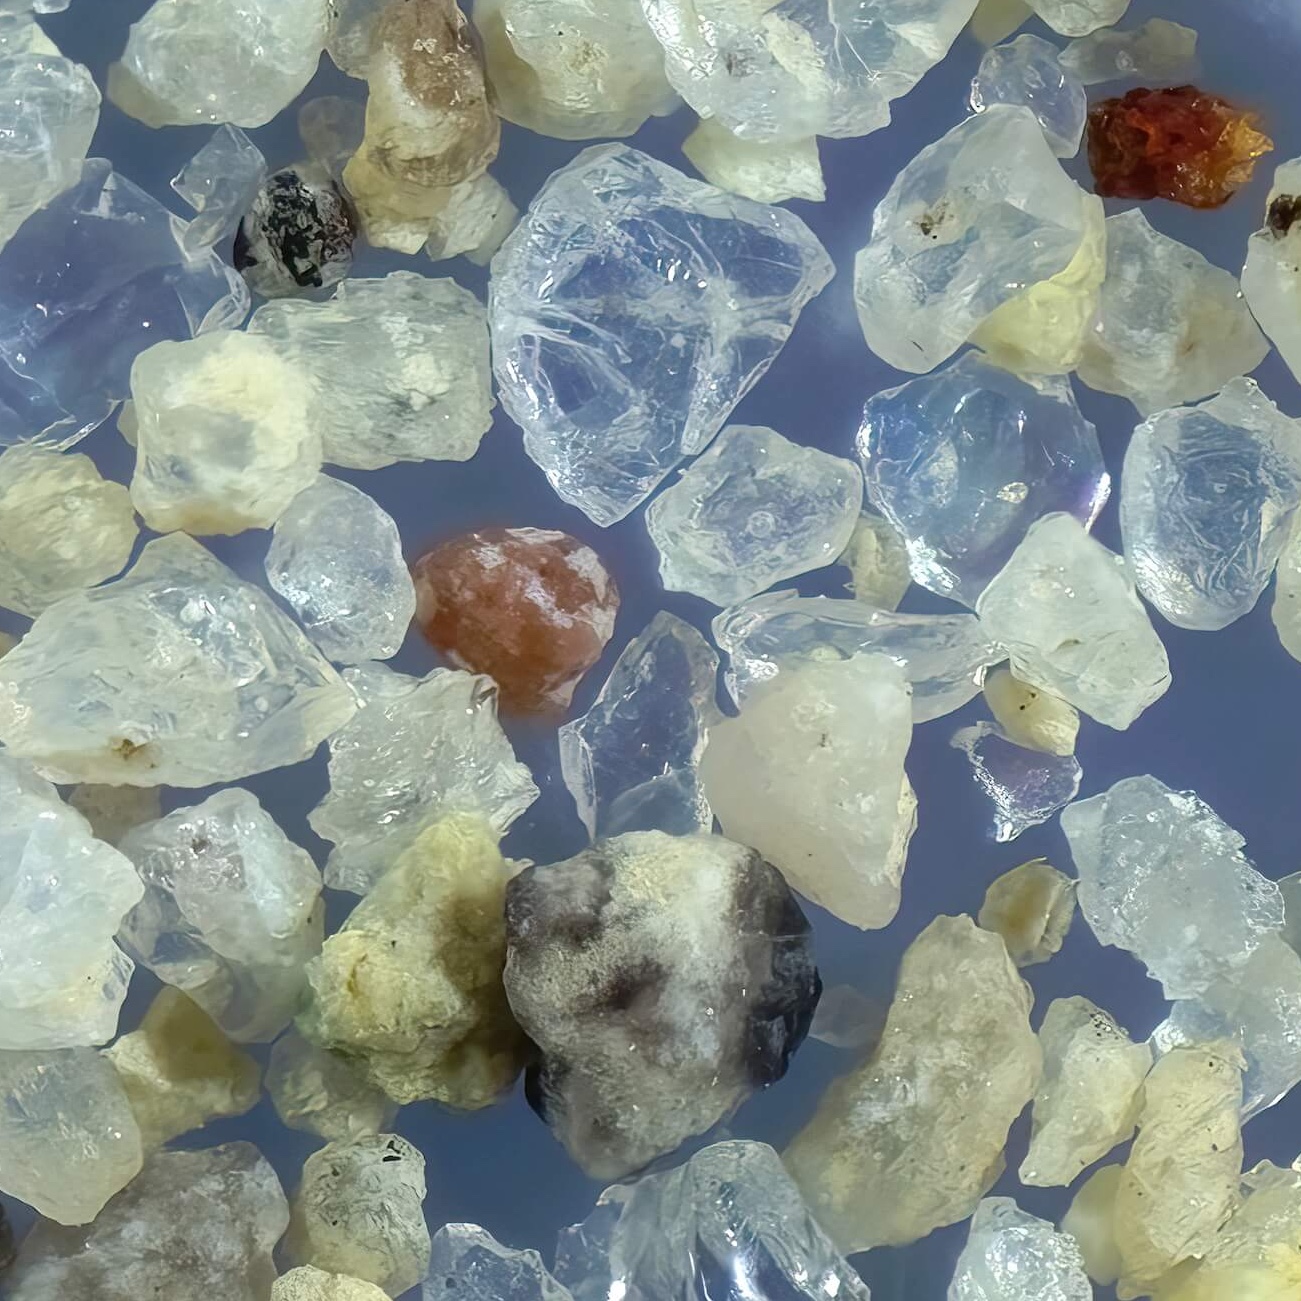 Sq2 Göreme Anatolia Turkey Sand Grains Magnified Under Microscope 5